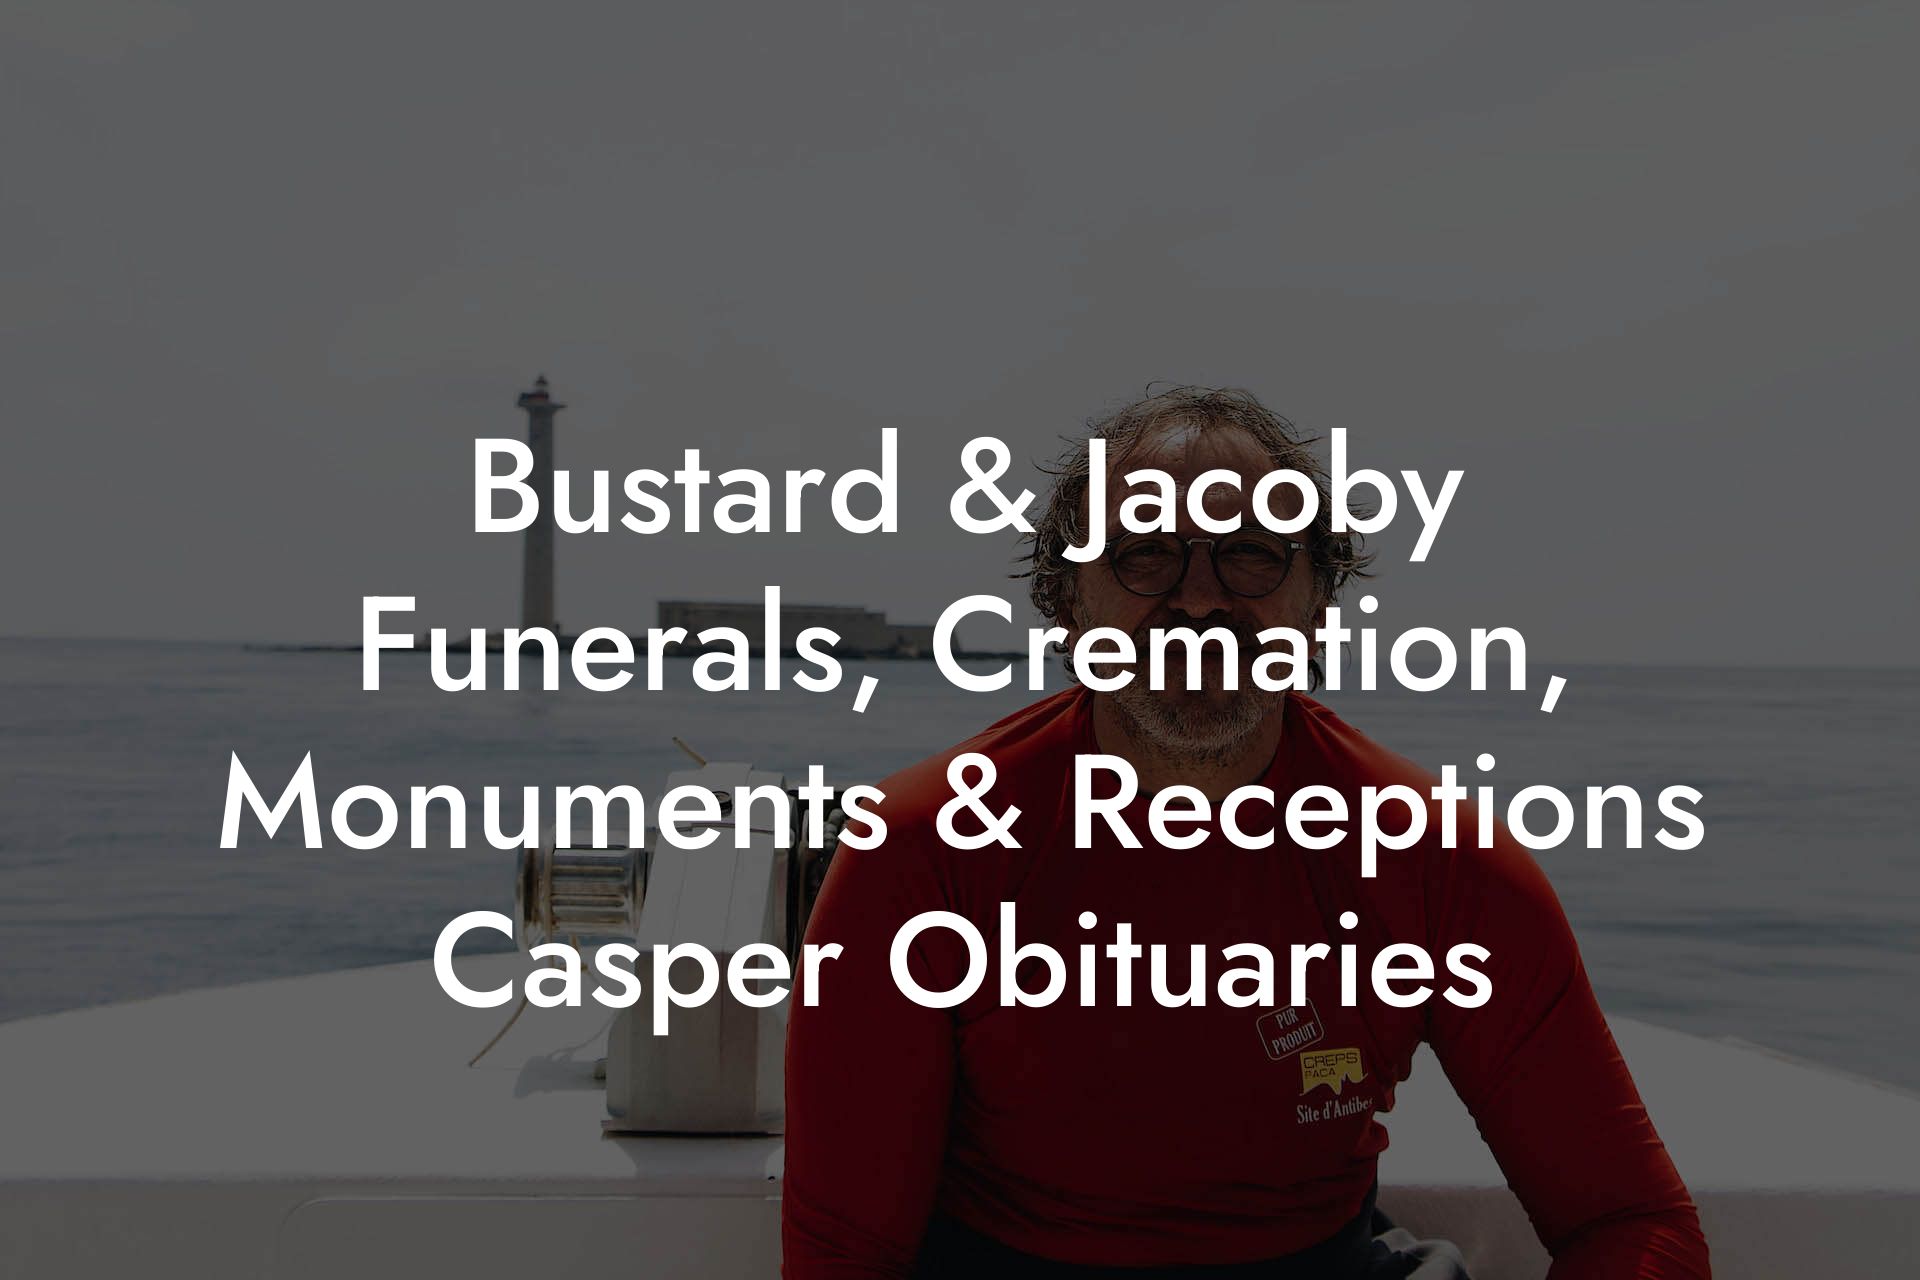 Bustard & Jacoby Funerals, Cremation, Monuments & Receptions Casper Obituaries